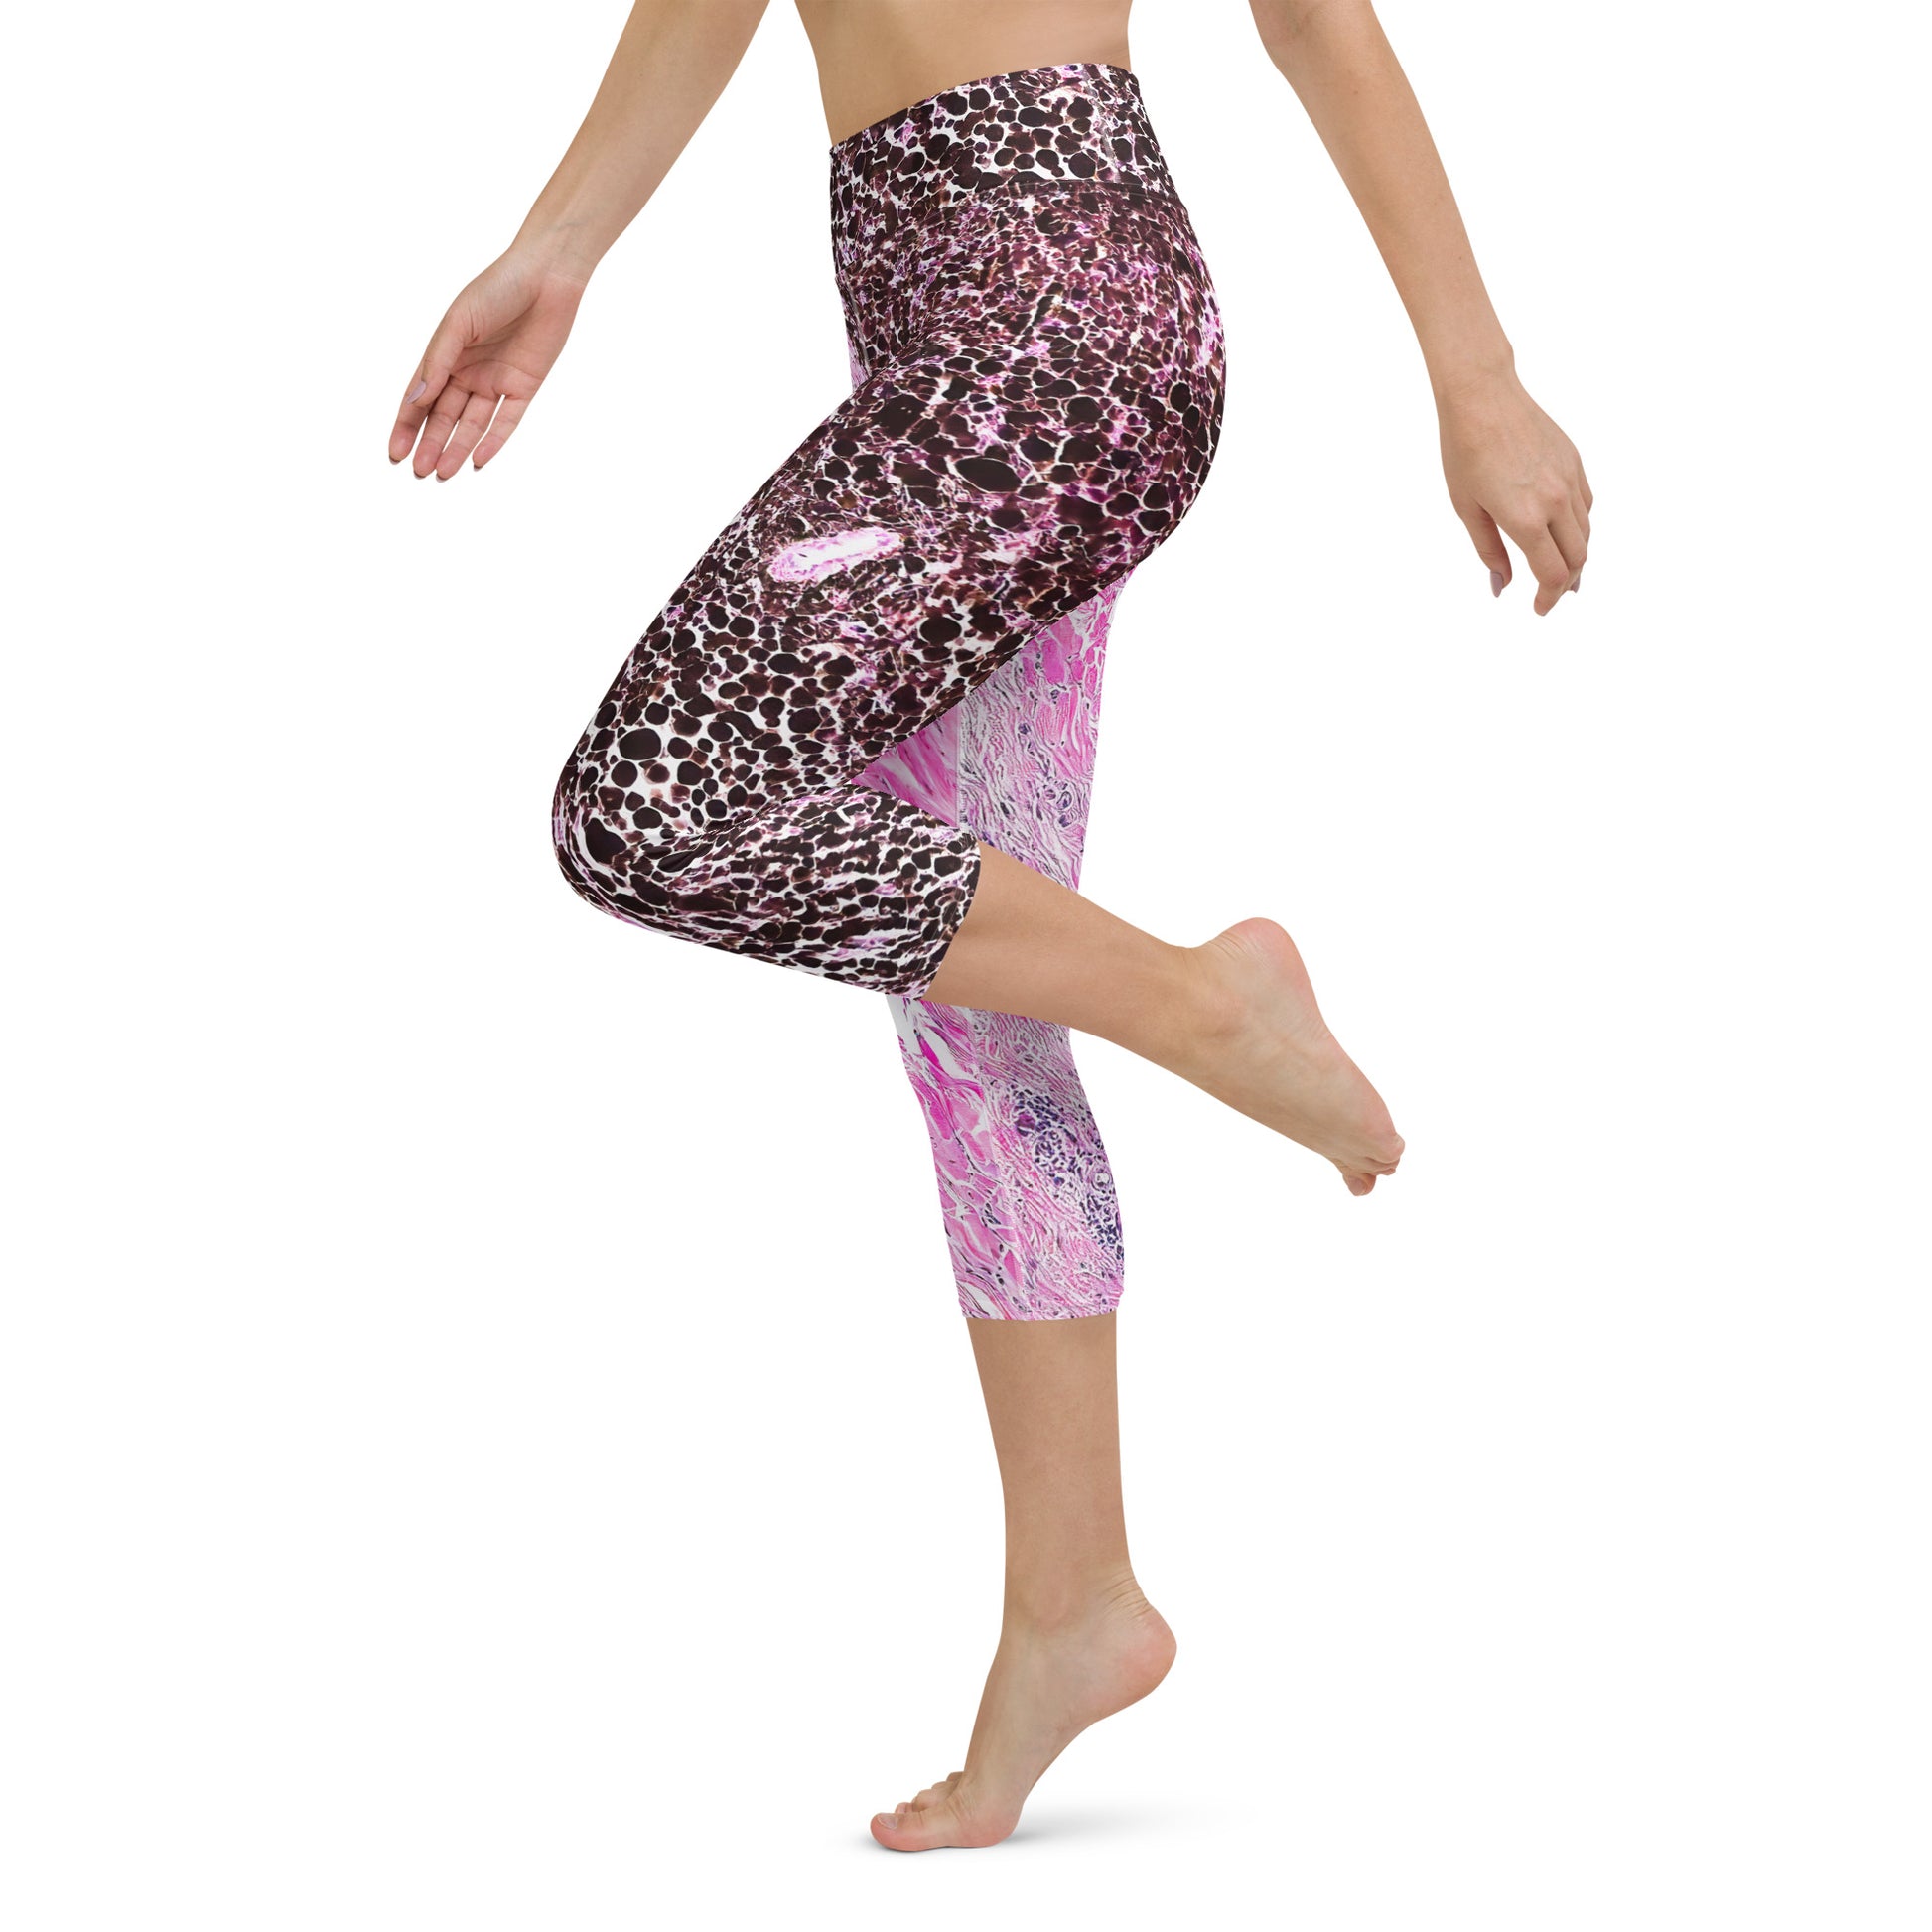 Capri Yoga Pants - "Last Line" - Stage 4 Breast Cancer Awareness Line" - Stage 4 Breast Cancer Awareness